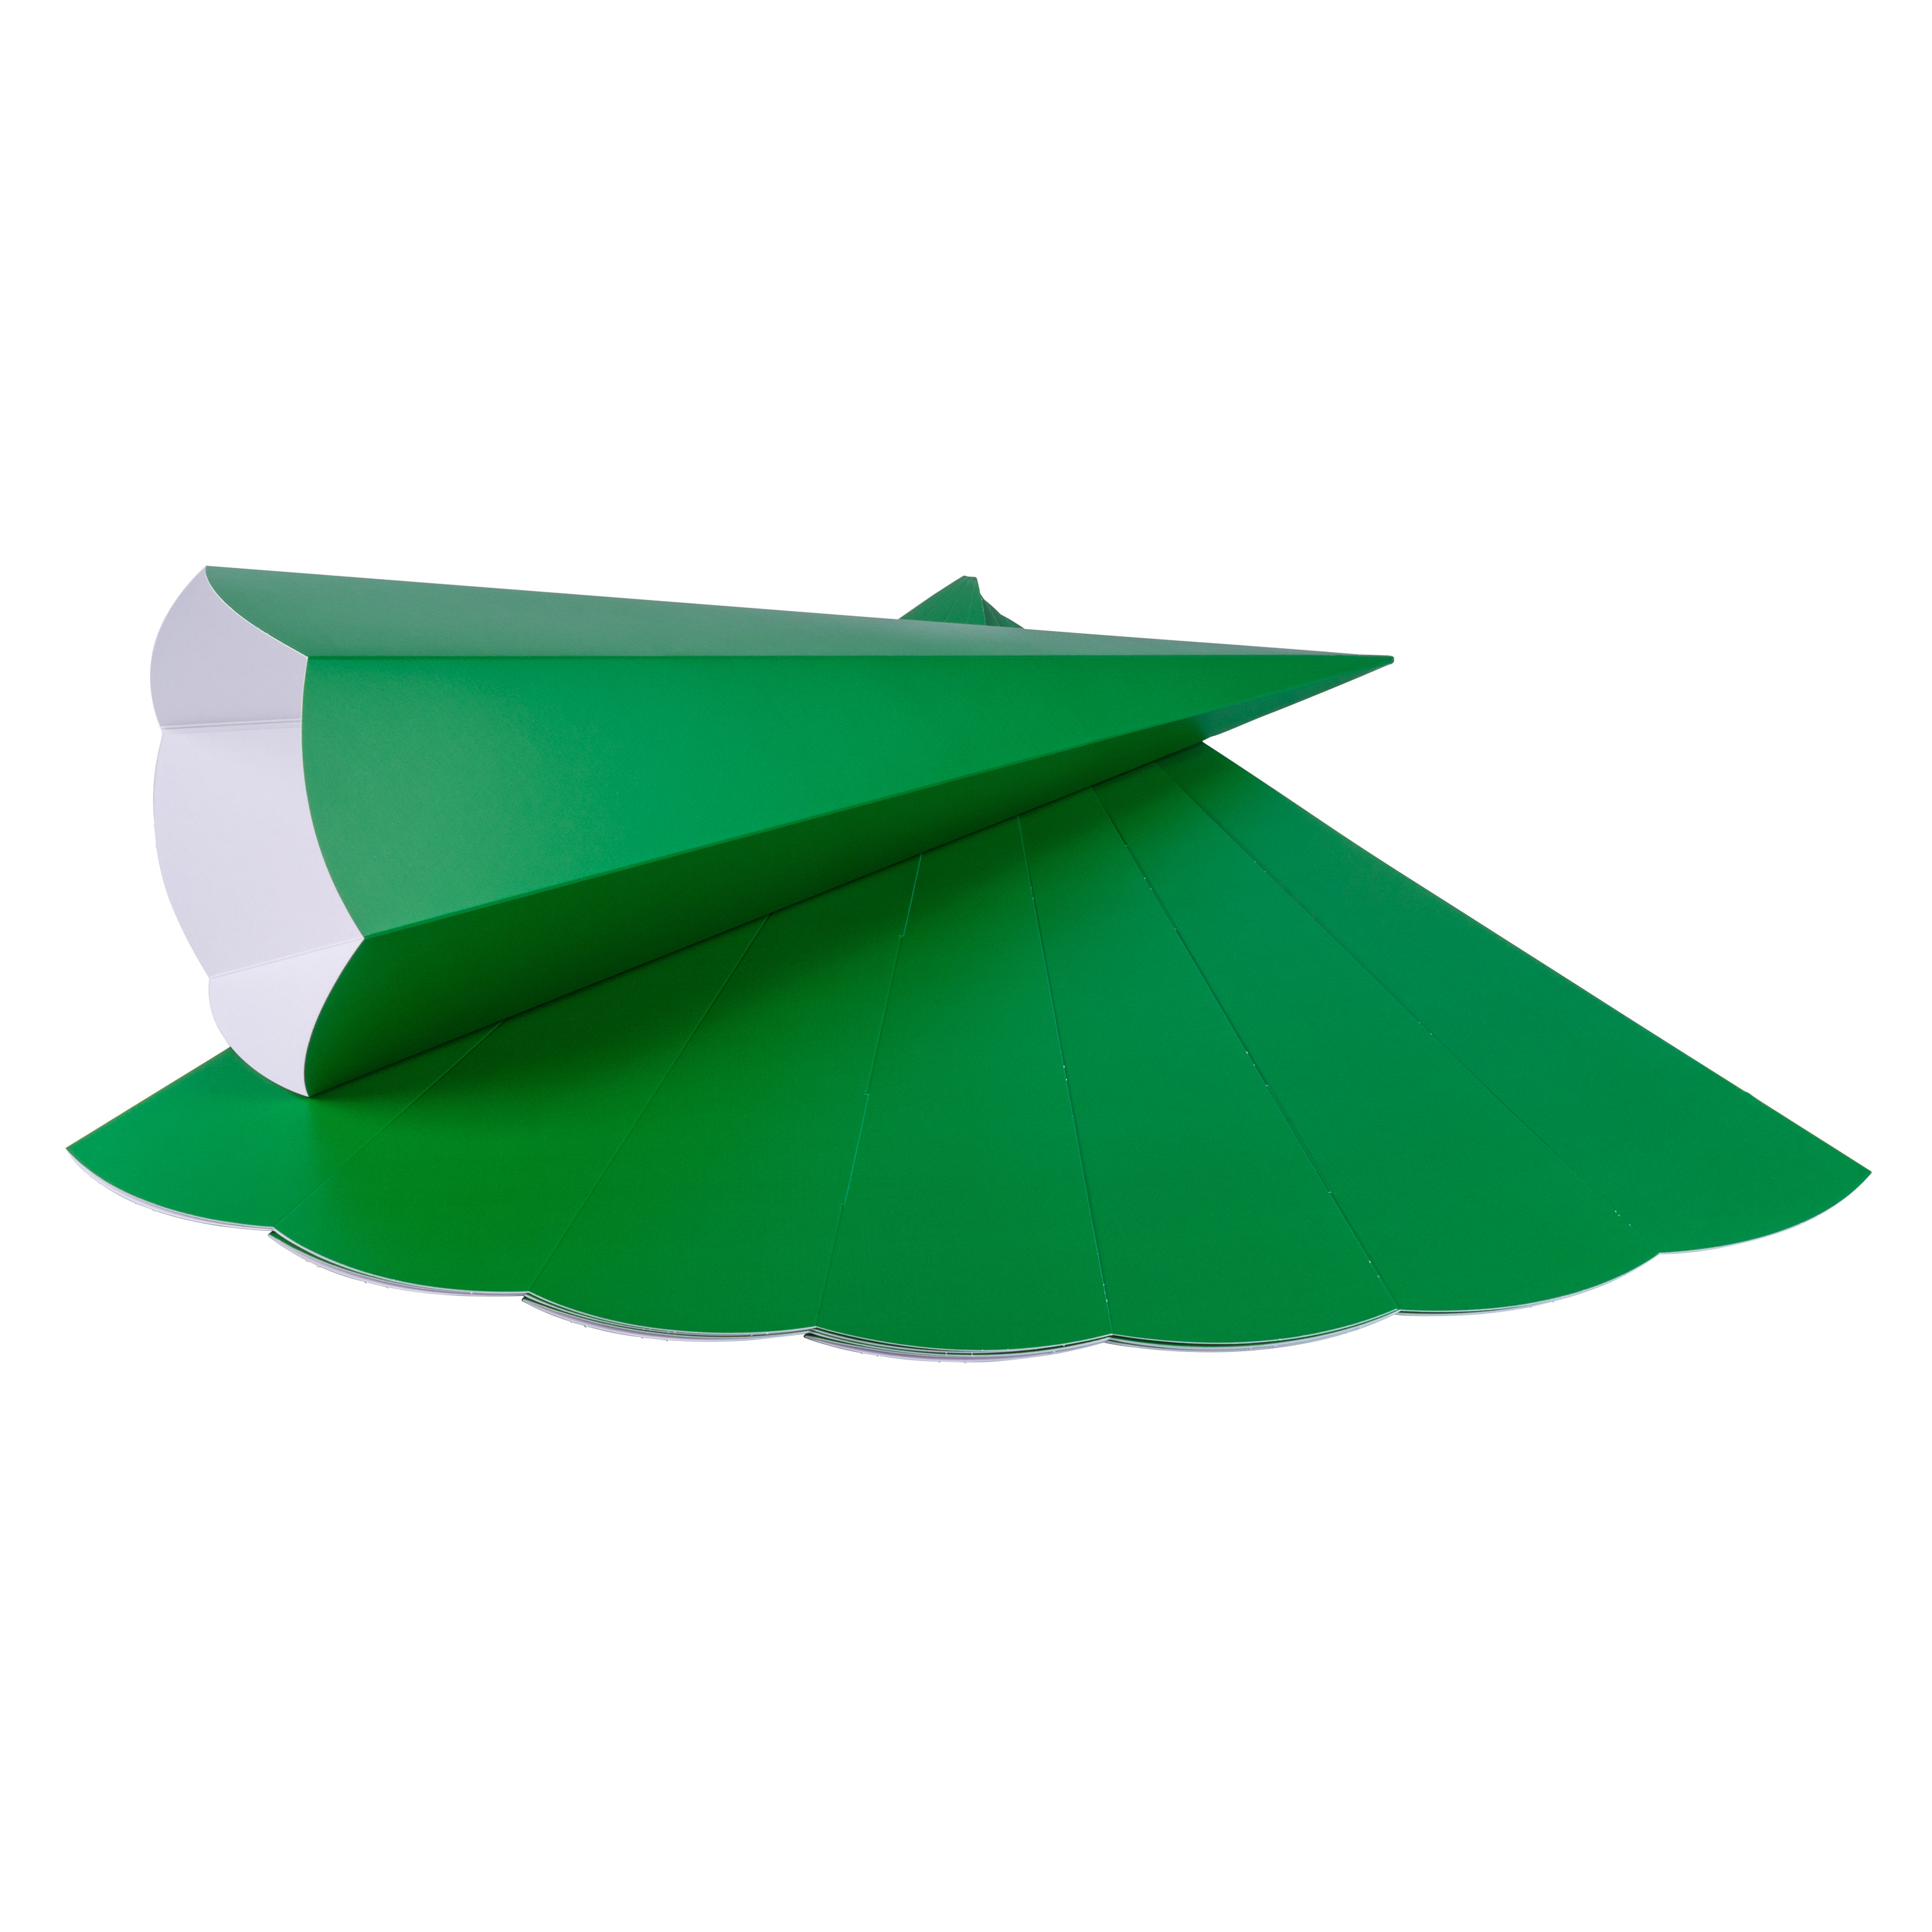 Schultüten-Rohlinge 'Farbkarton', 5 Stück, grün